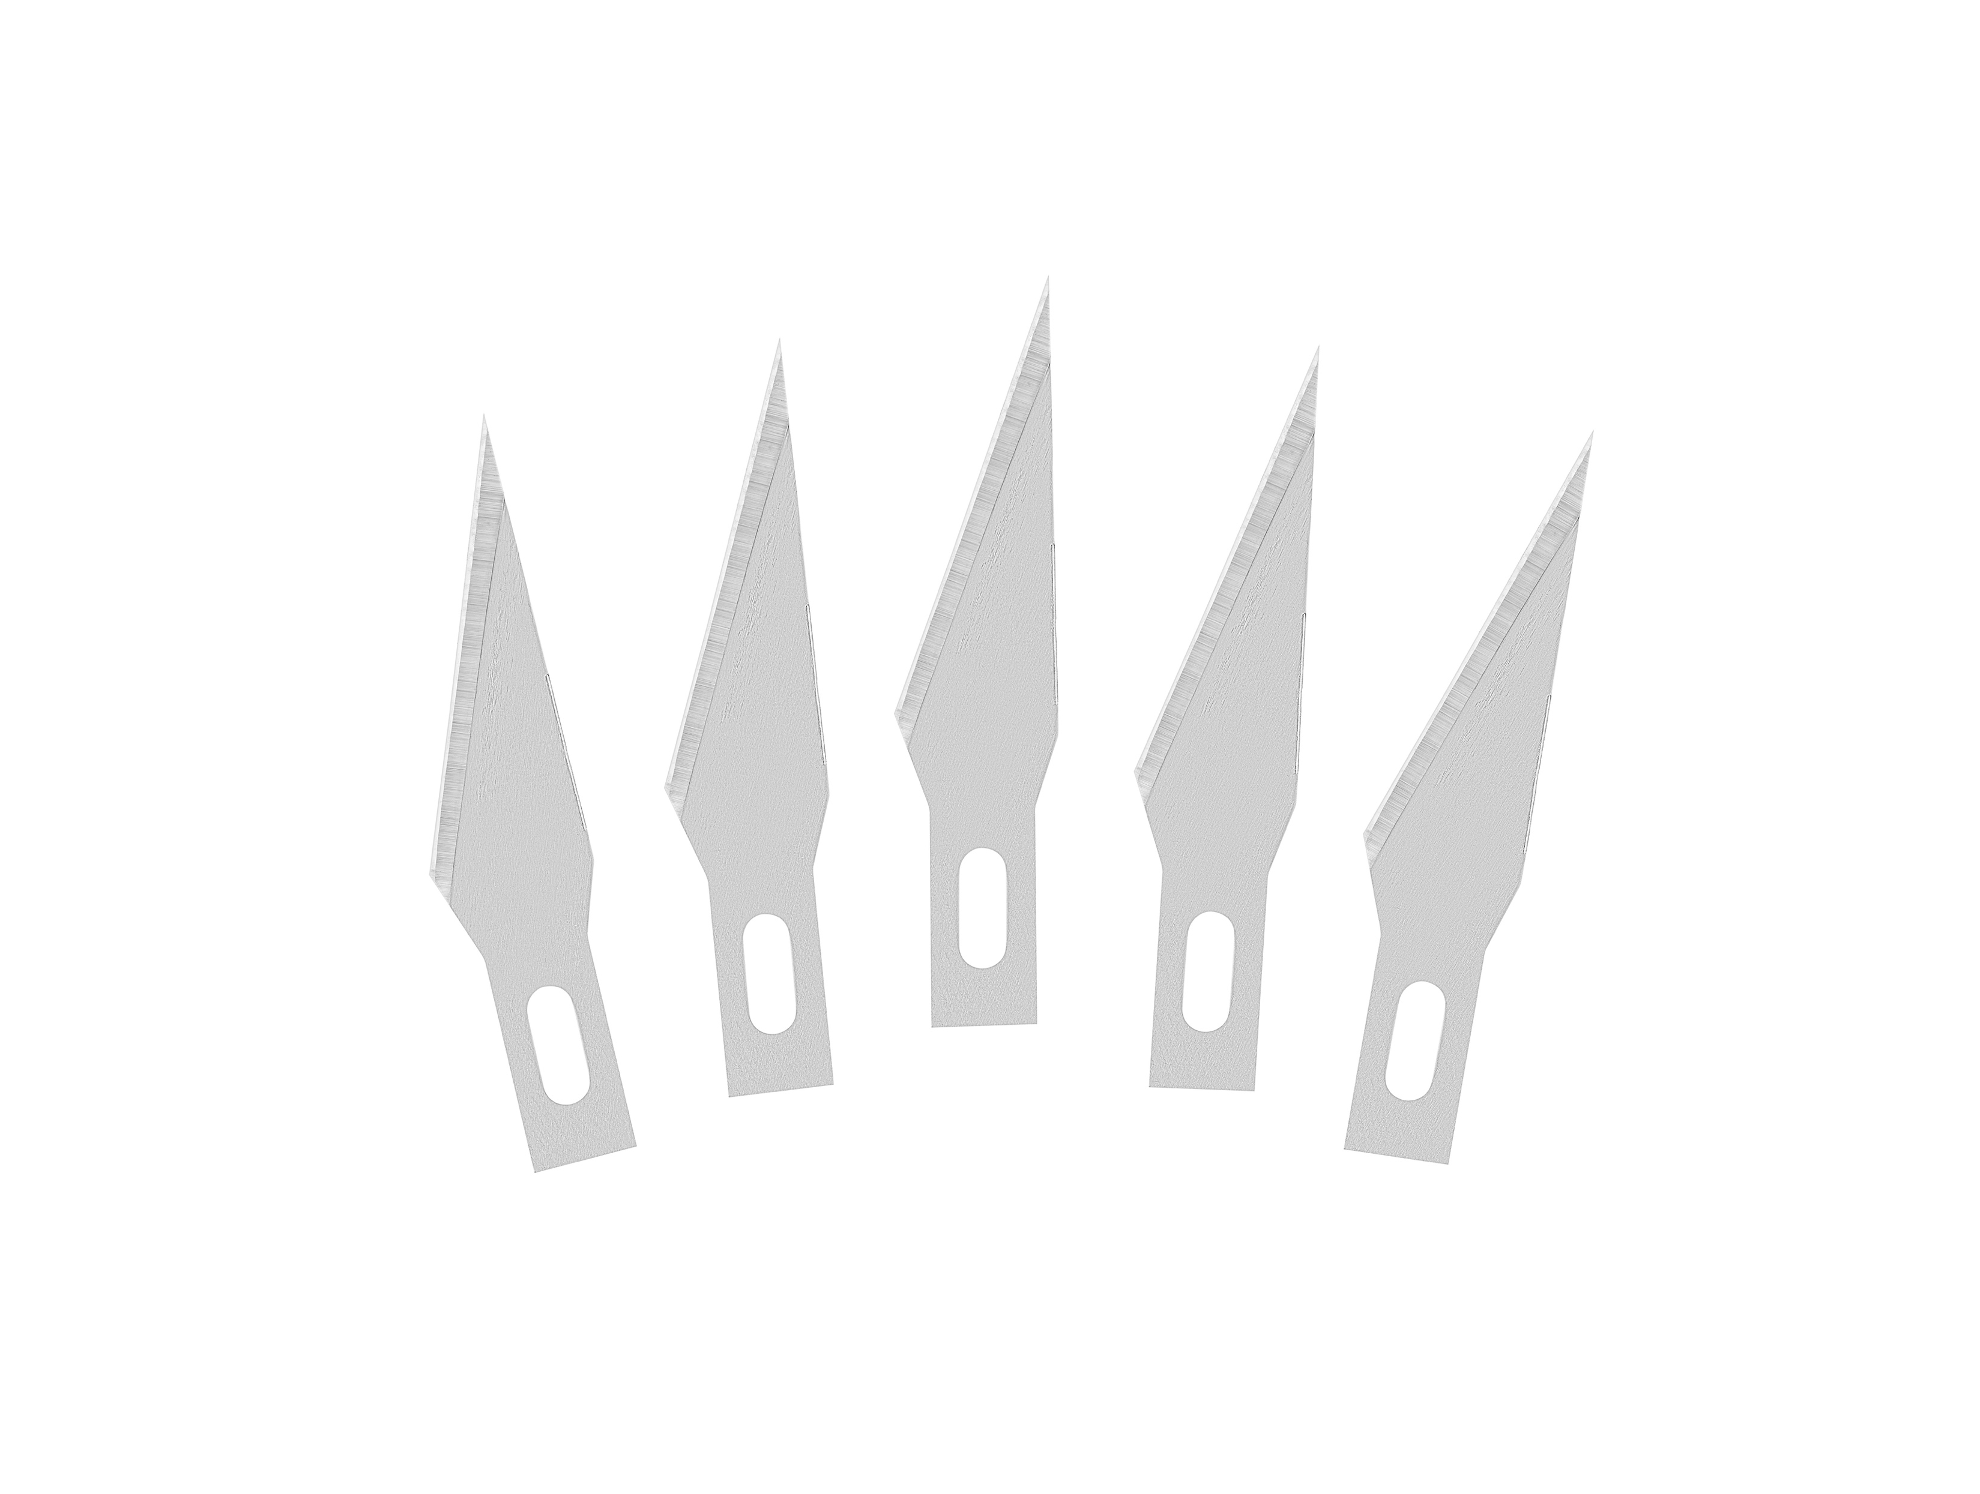 2-IN-1 HOBBY KNIFE WITH BLADE STORAGE - RYOBI Tools